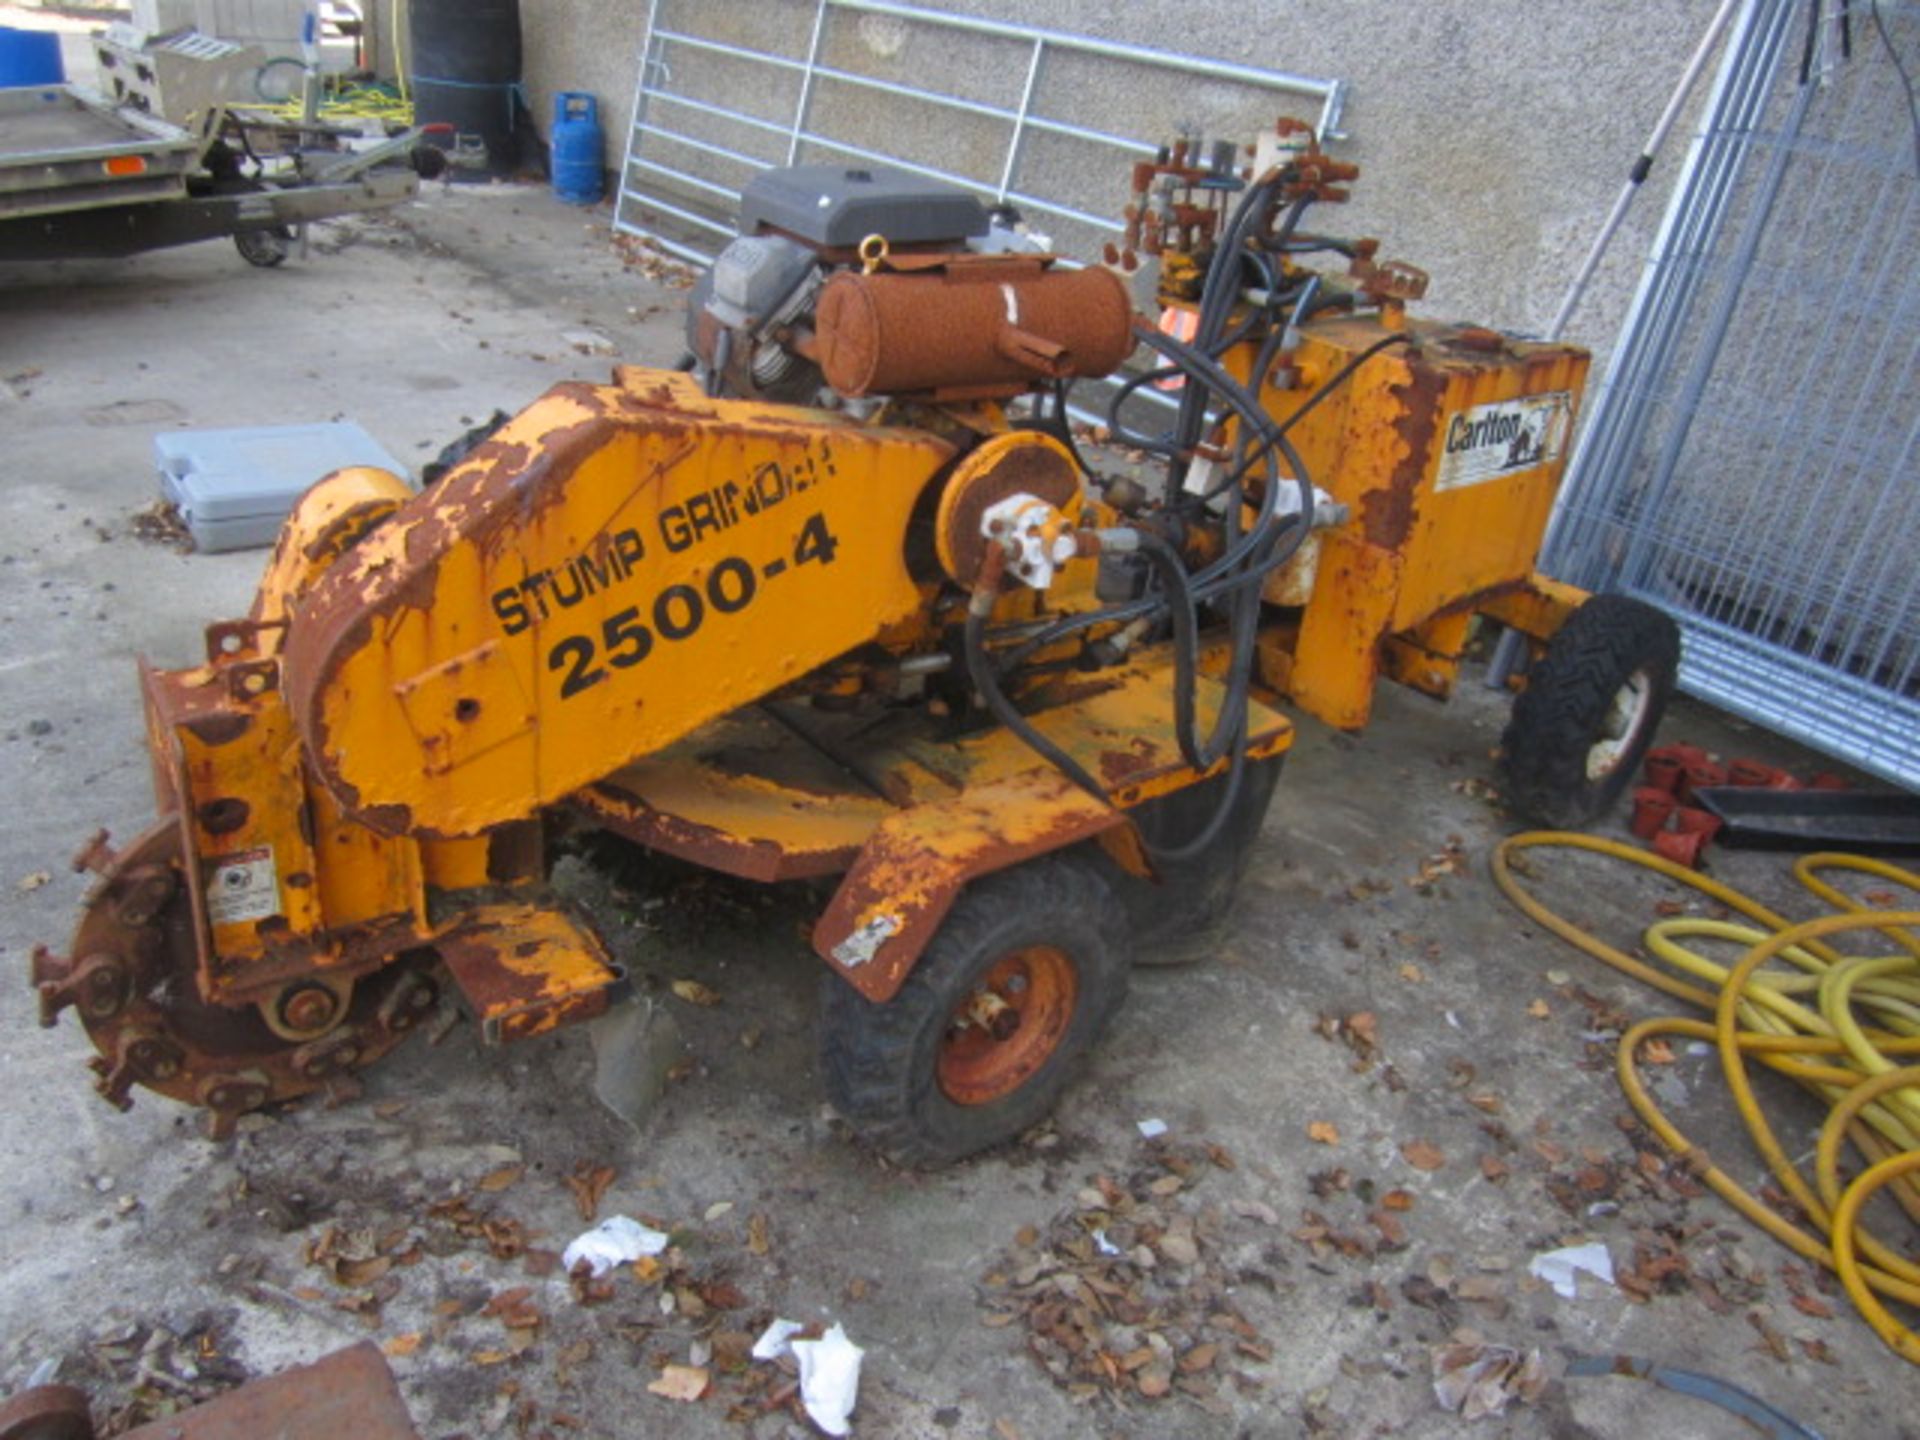 Carlton 2500-4 stump grinder, Kohler petrol engine - for spares or repair - Image 2 of 6